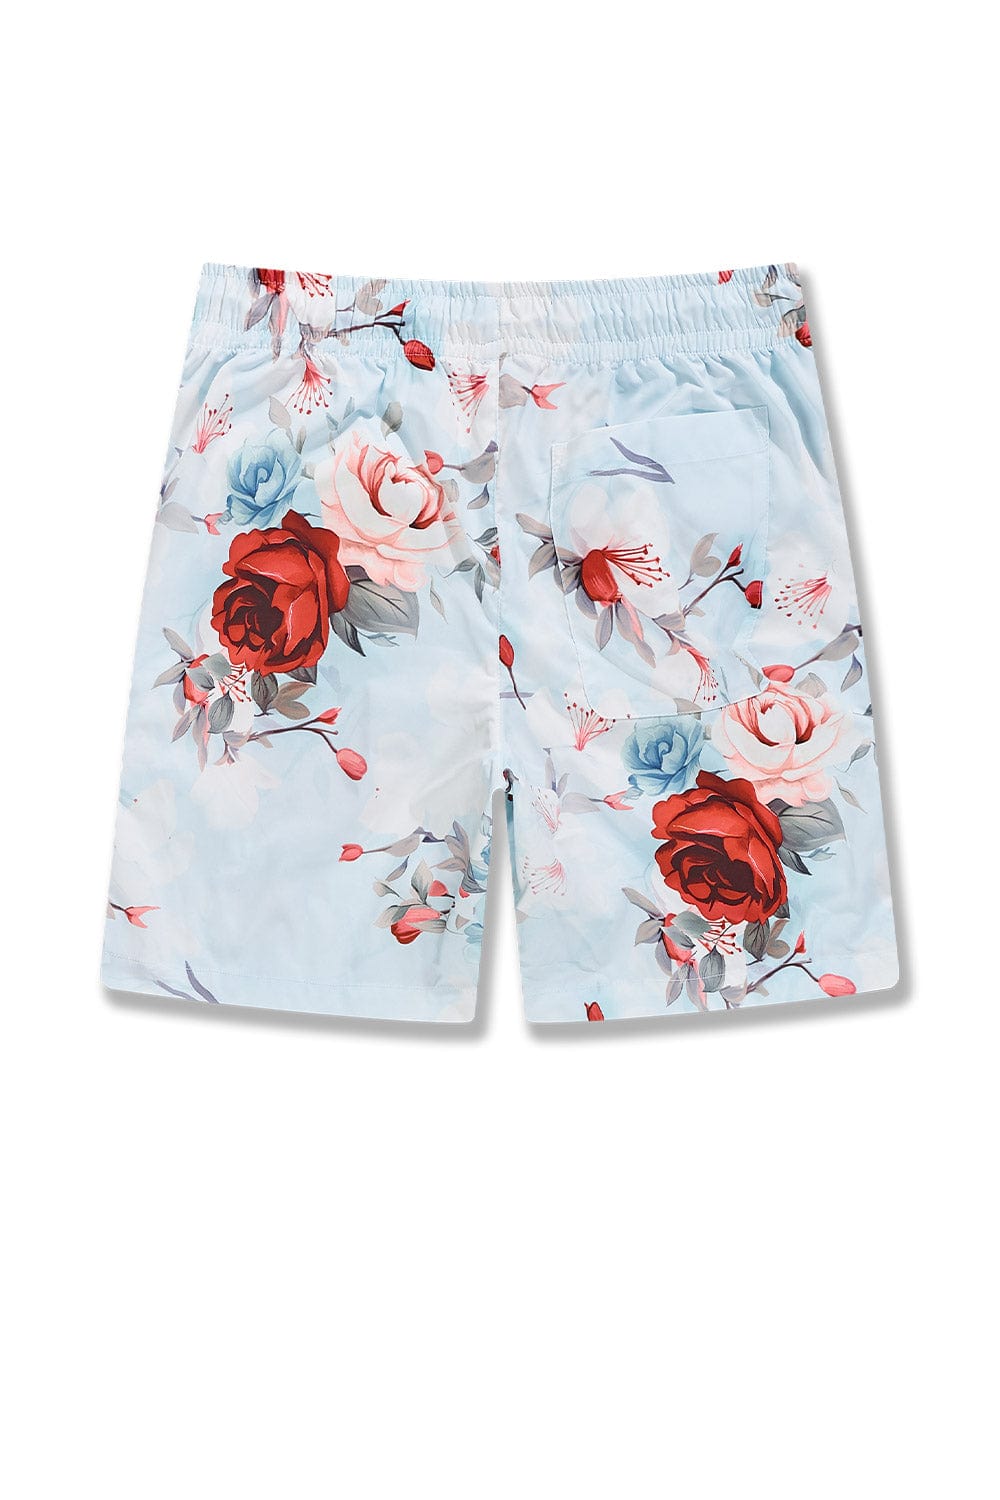 Jordan Craig Retro - Ibiza Lounge Shorts (Red Floral)